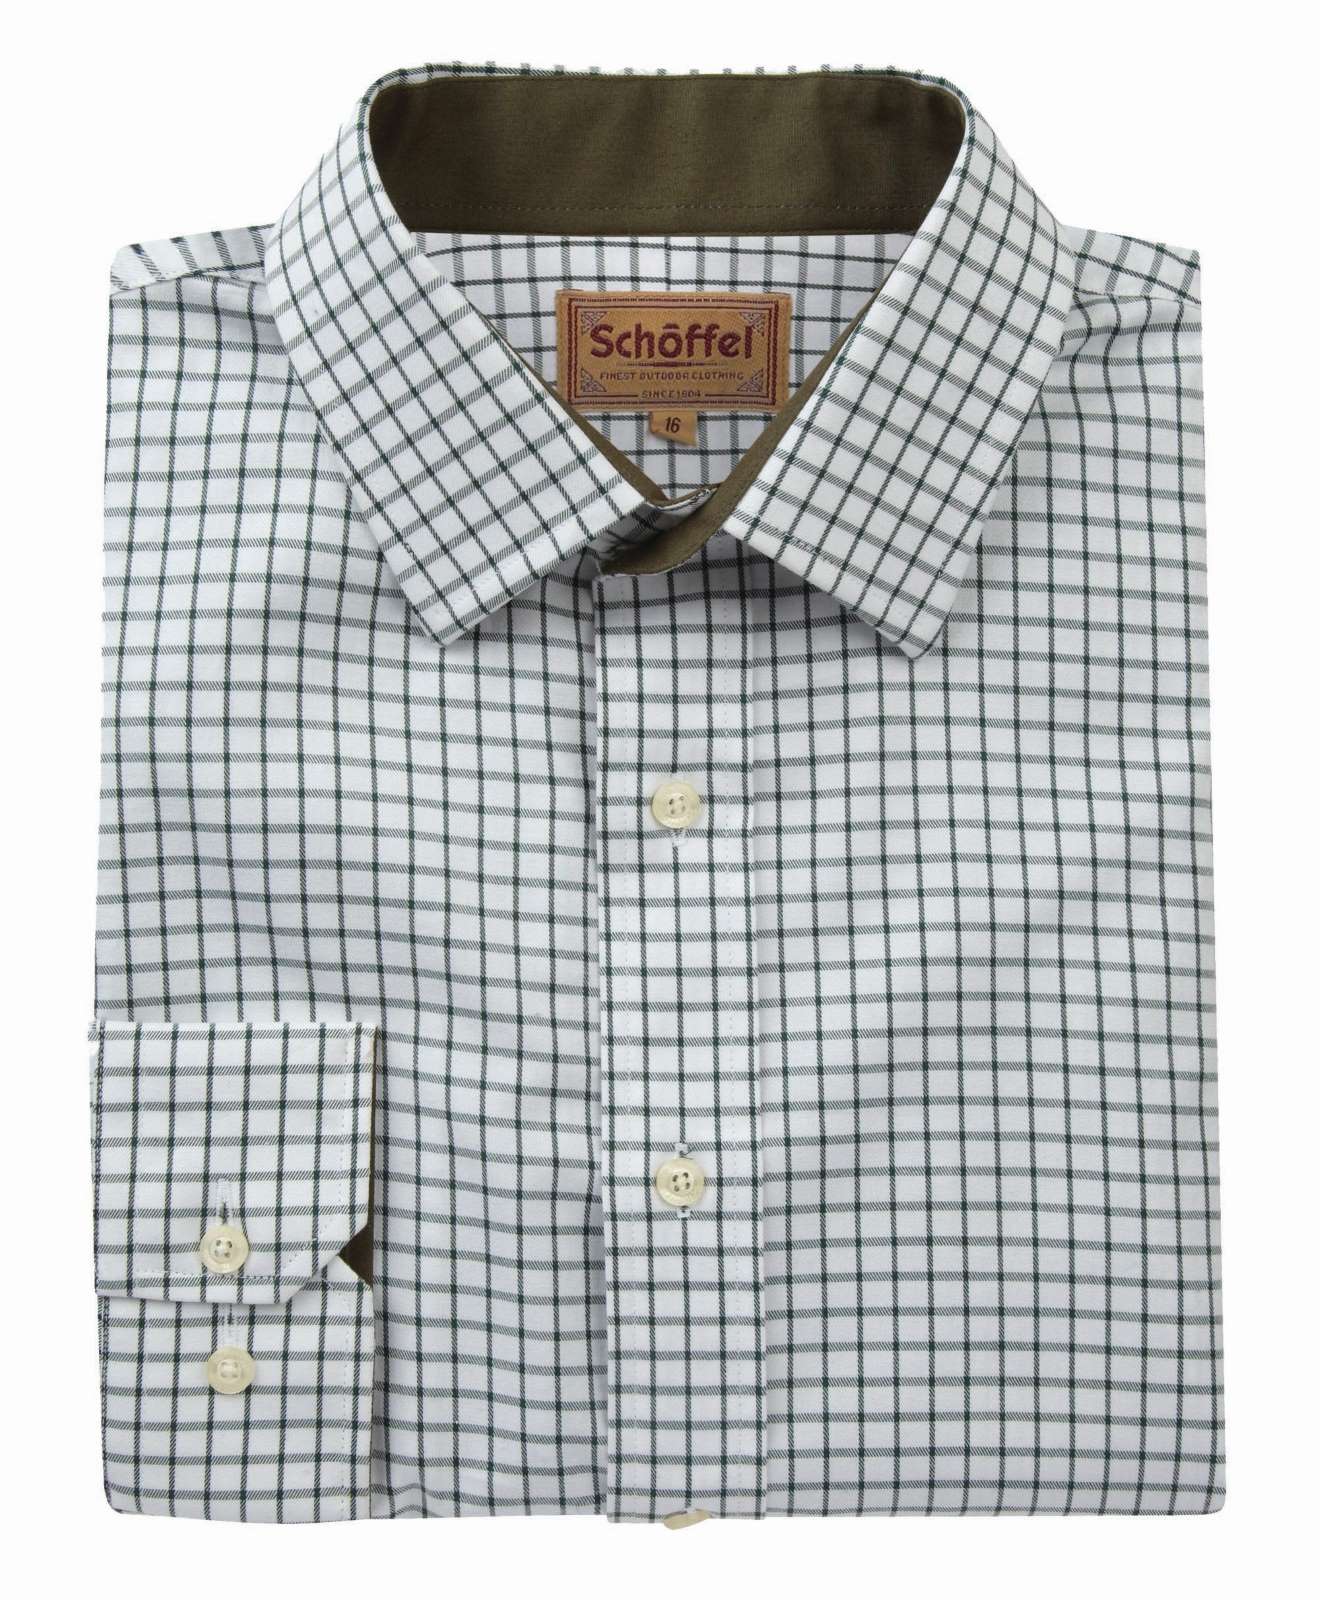 Schoffel Cambridge Classic Shirt Olive